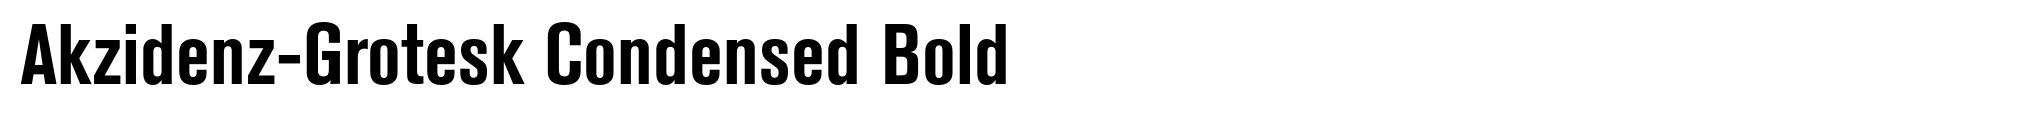 Akzidenz-Grotesk Condensed Bold image